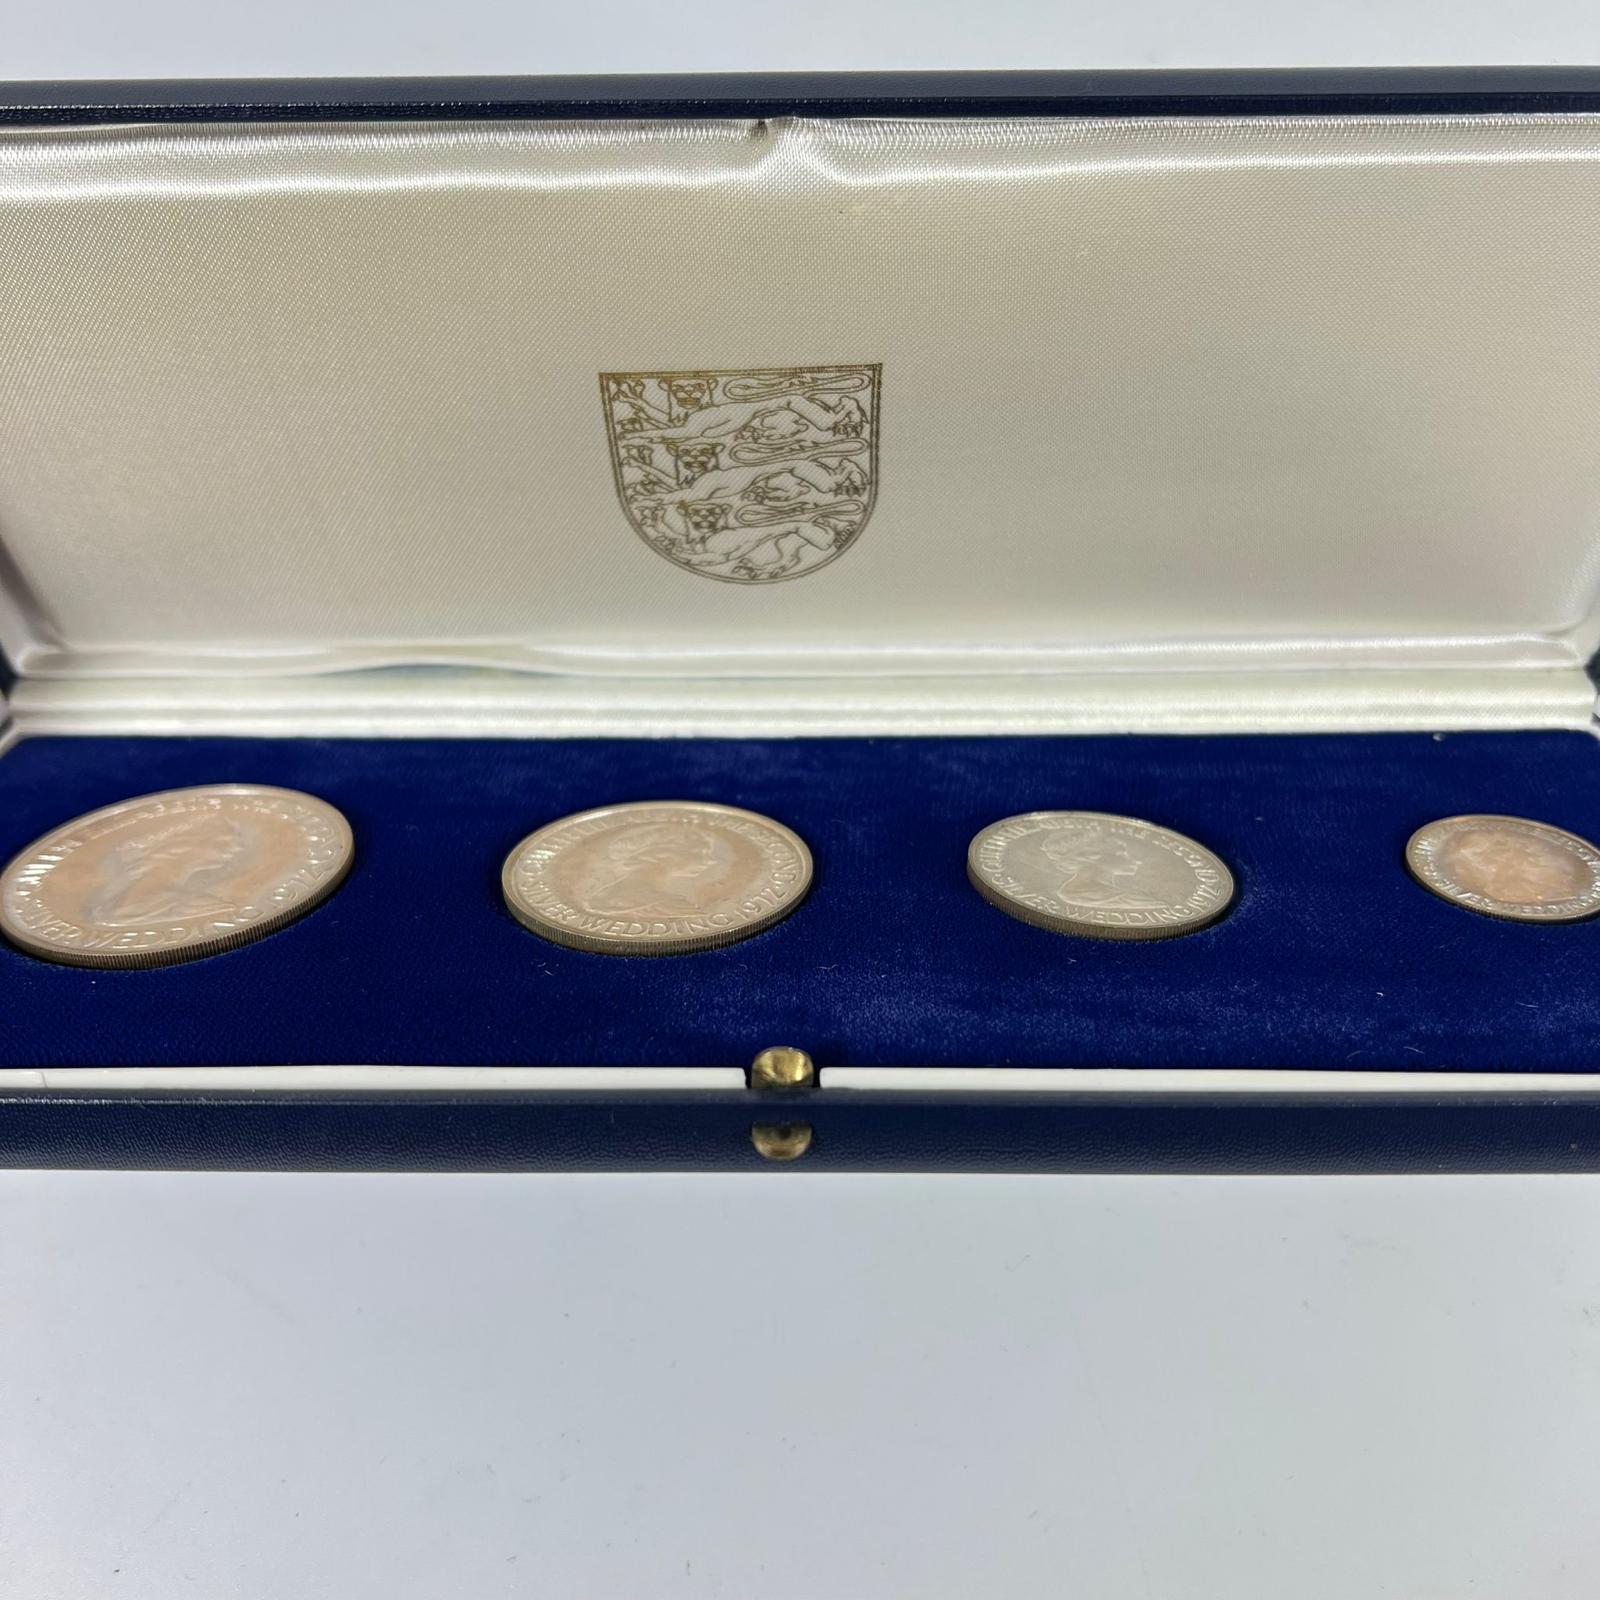 1972 Queen Elizabeth II Silver Wedding Jersey 4 coin set in case - Image 4 of 5